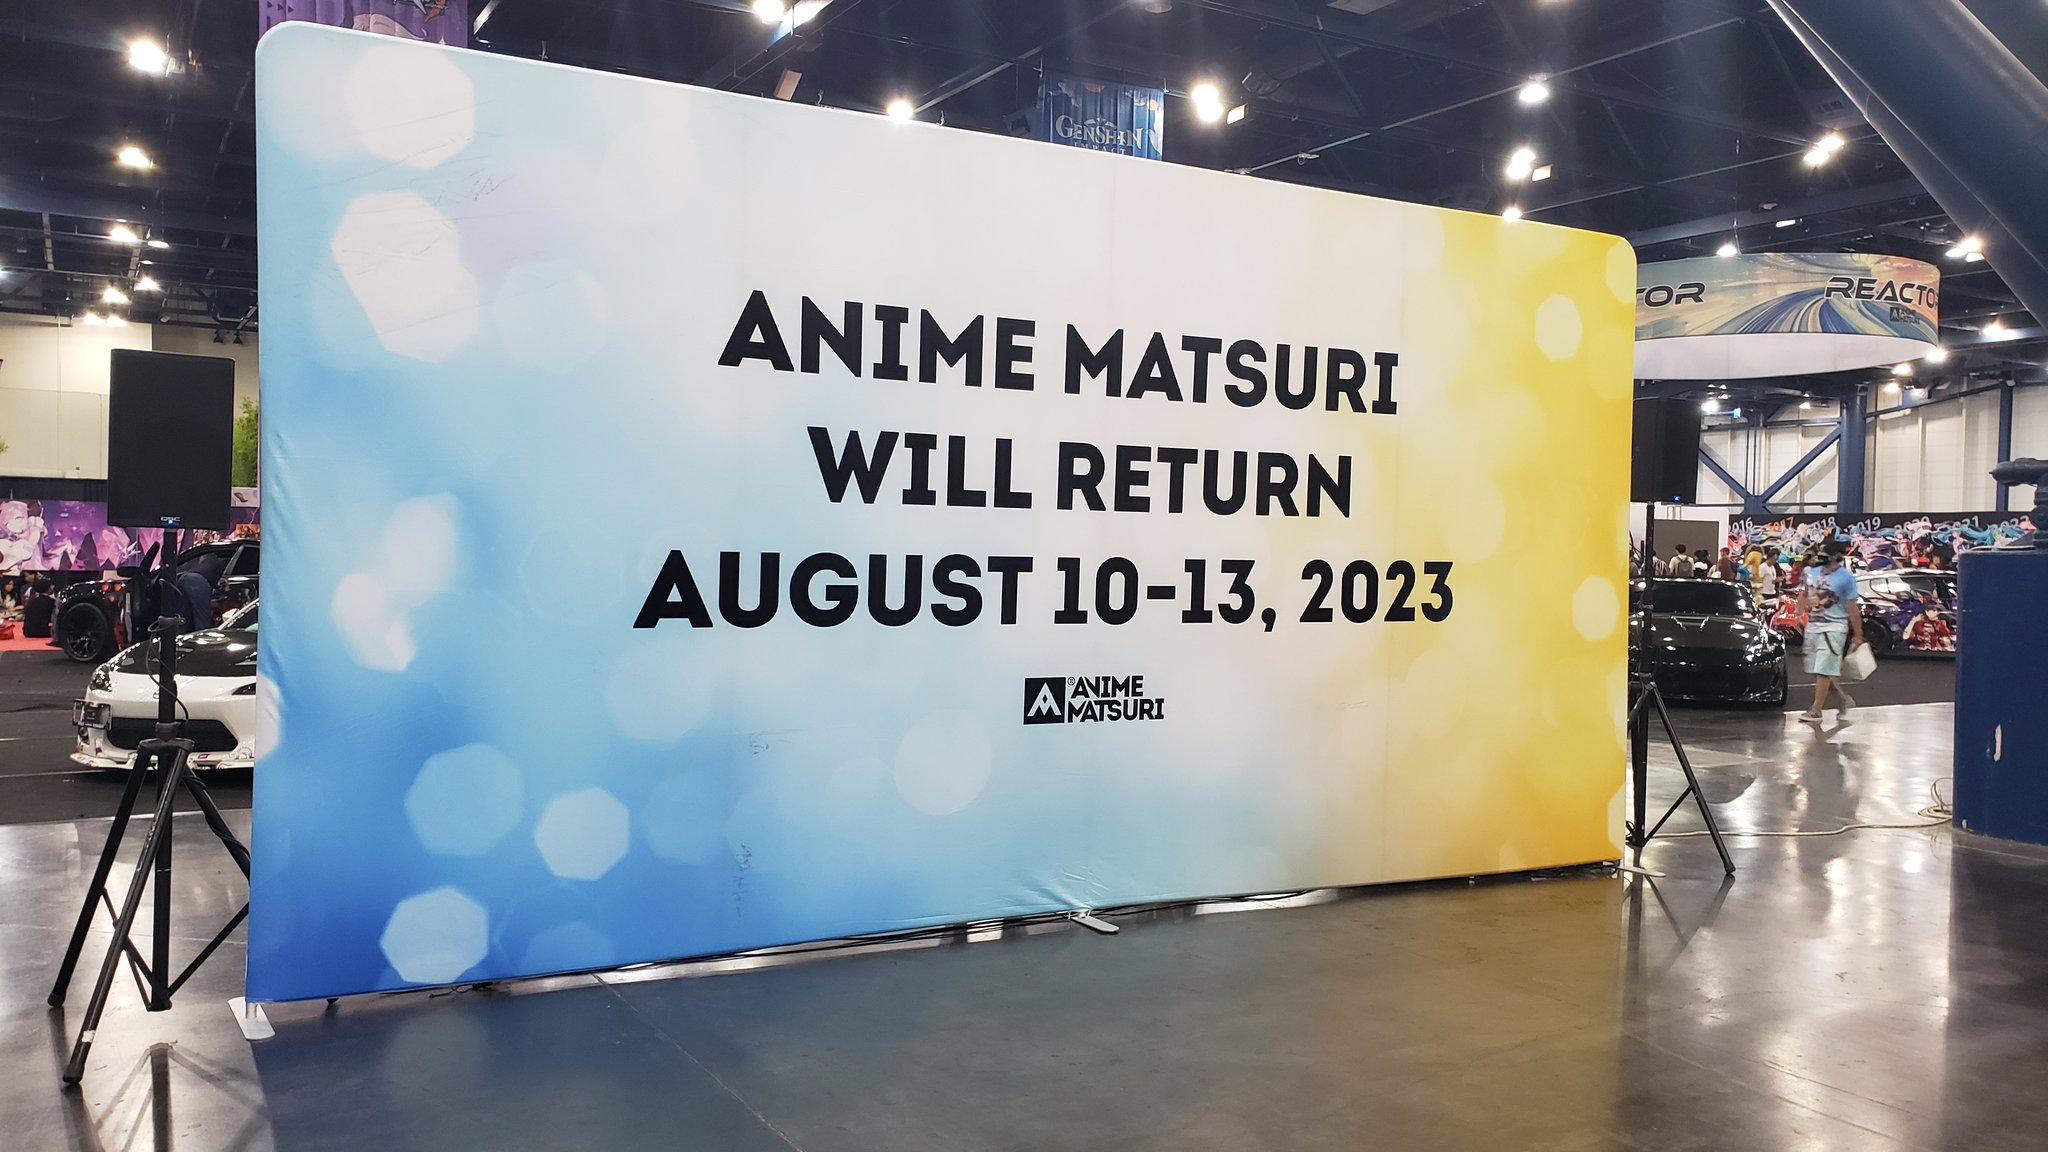 Anime Matsuri on Twitter AM 2021 Prop Weapons Policy Shibukaho  httpstcom7wQBDmJf7  Twitter